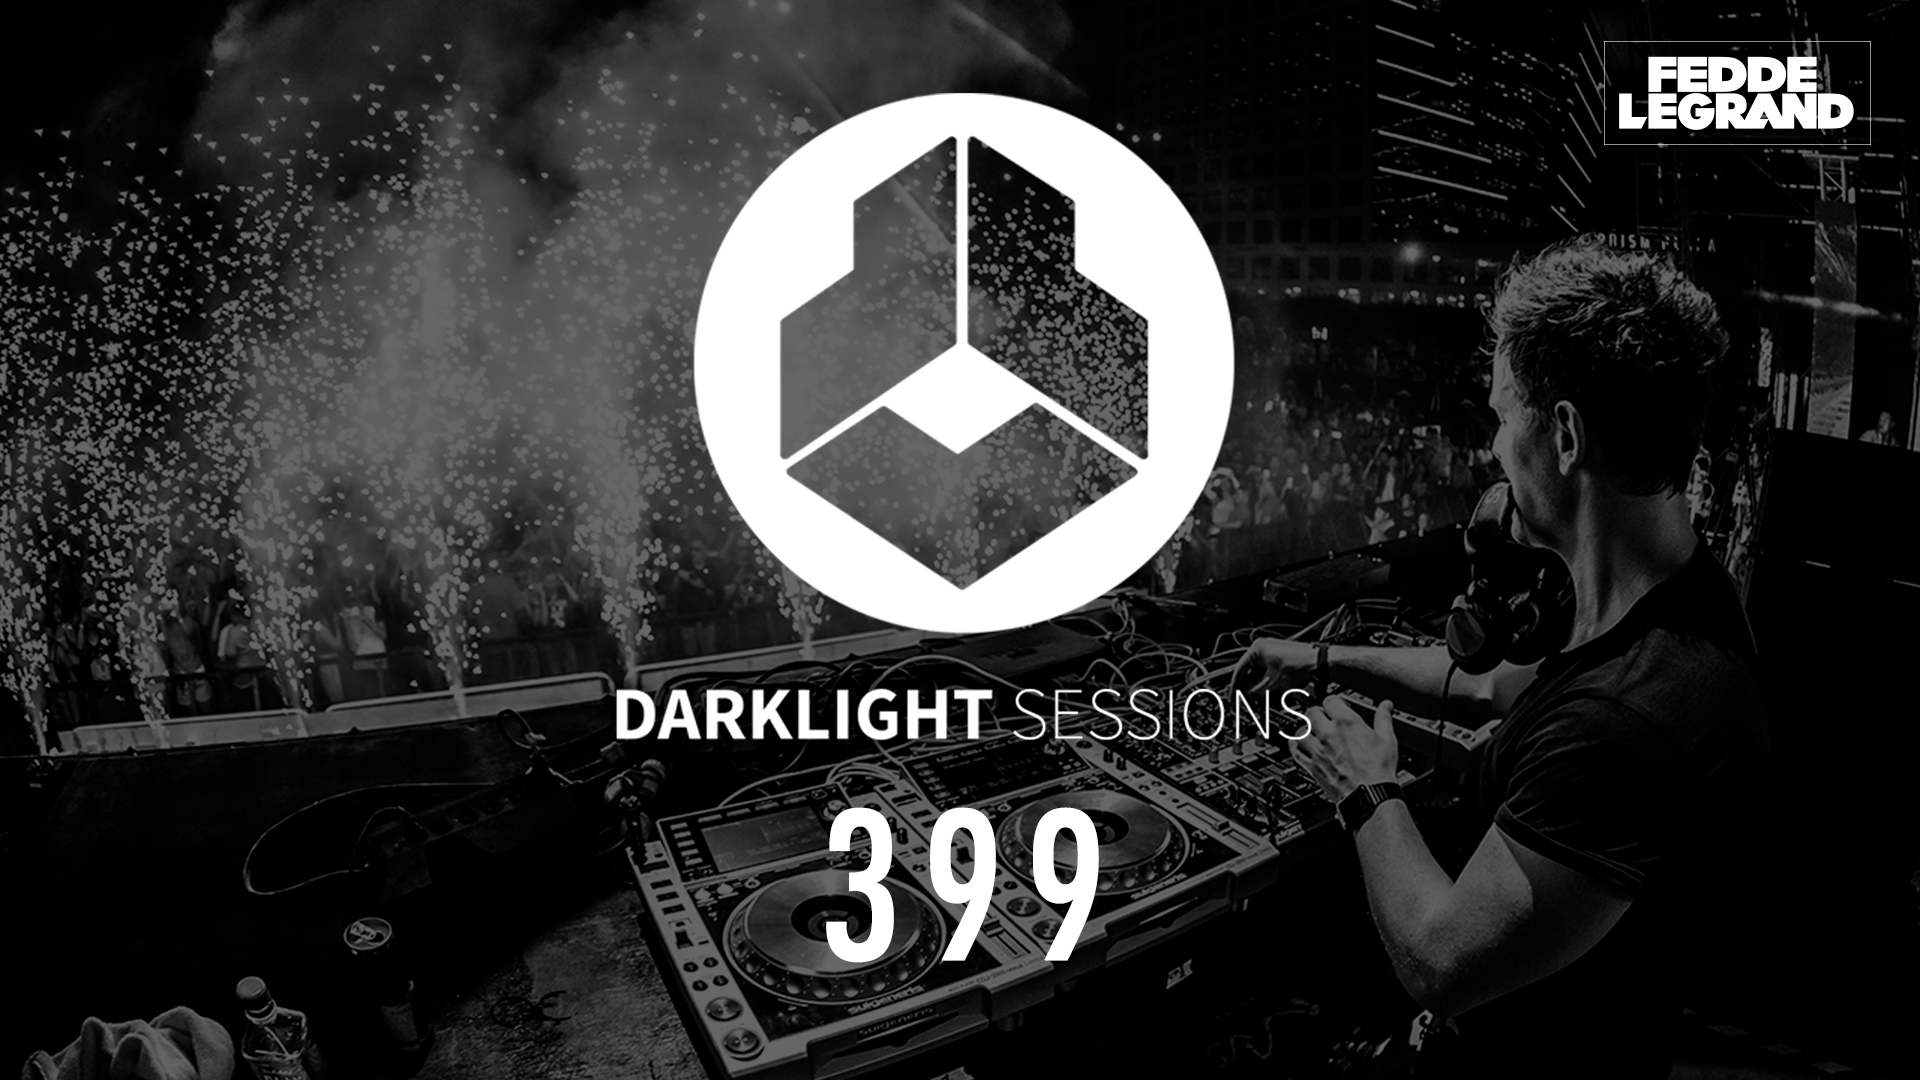 Darklight Sessions 399